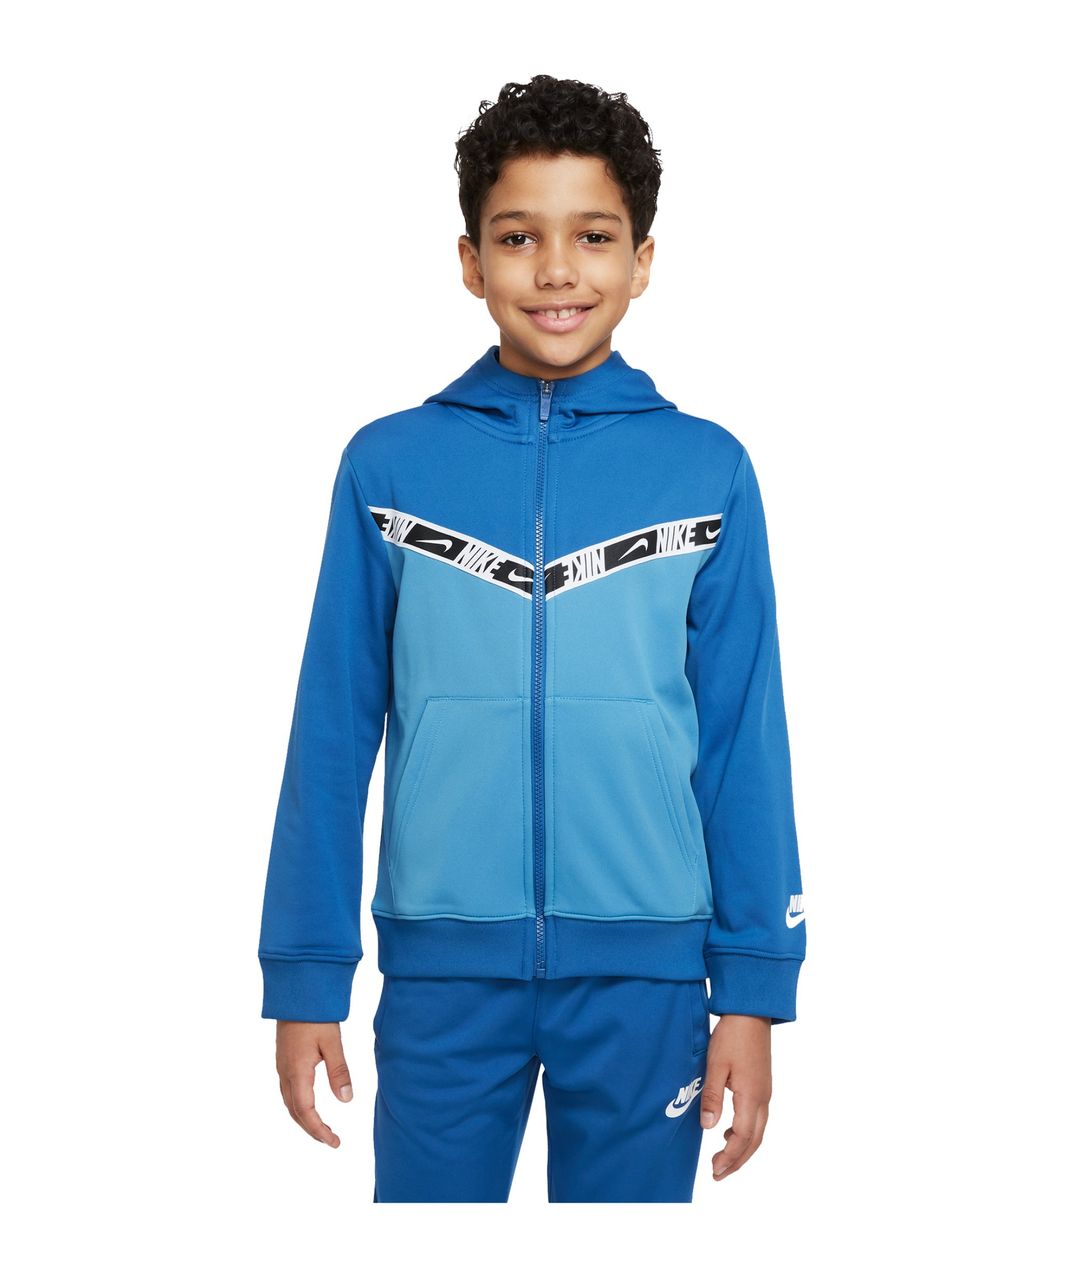 Nike Sportswear Kapuzenjacke Kids Blau F407